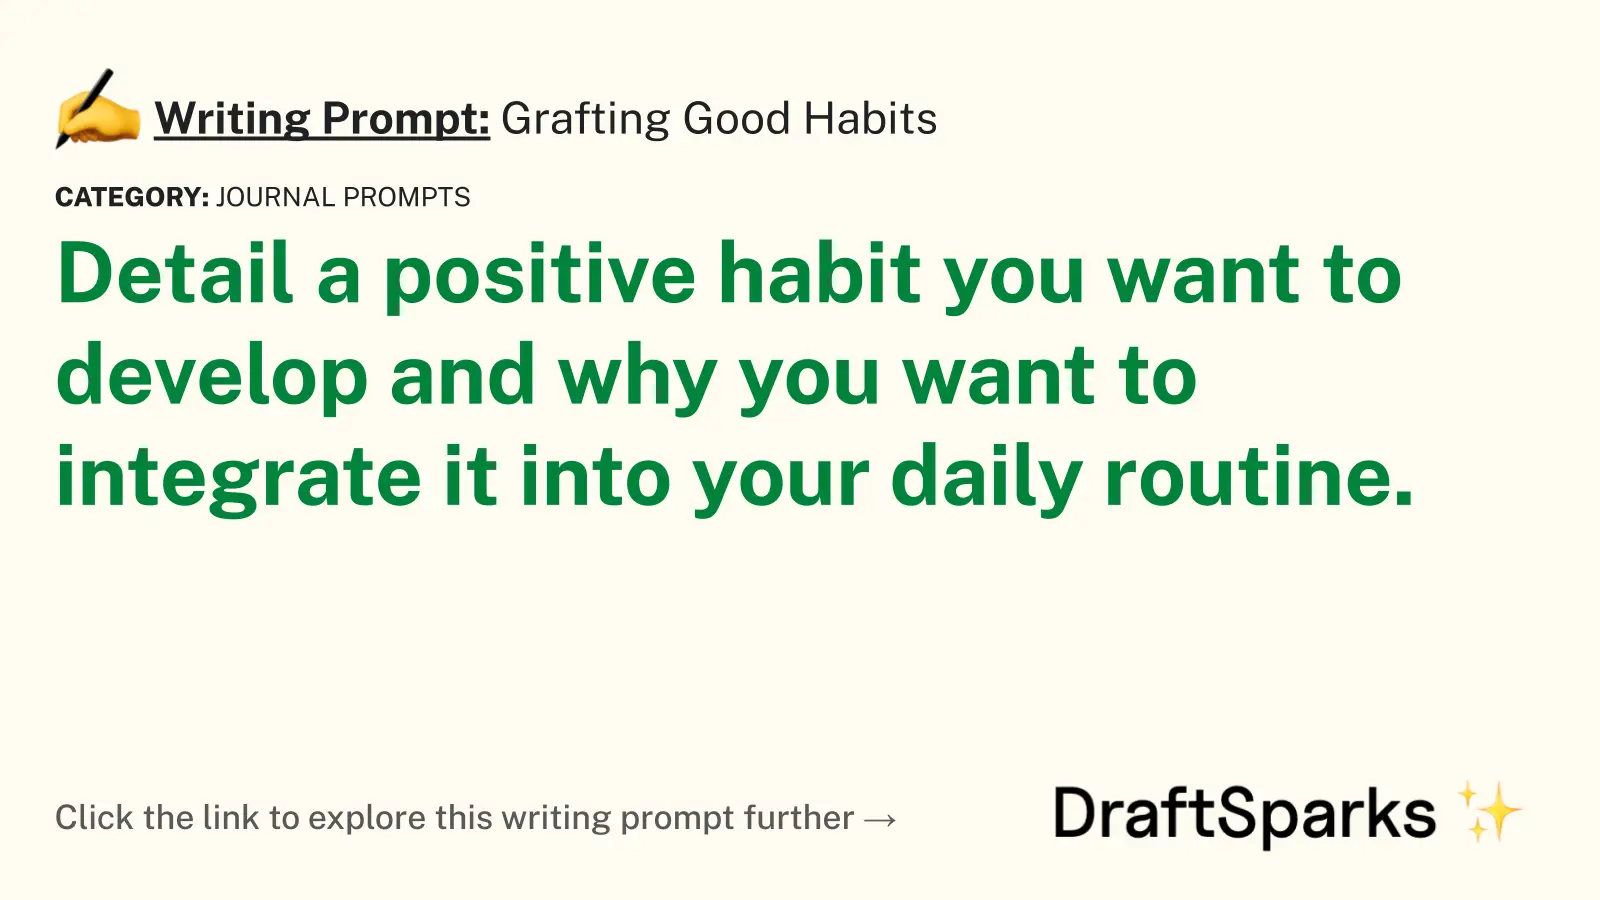 Grafting Good Habits